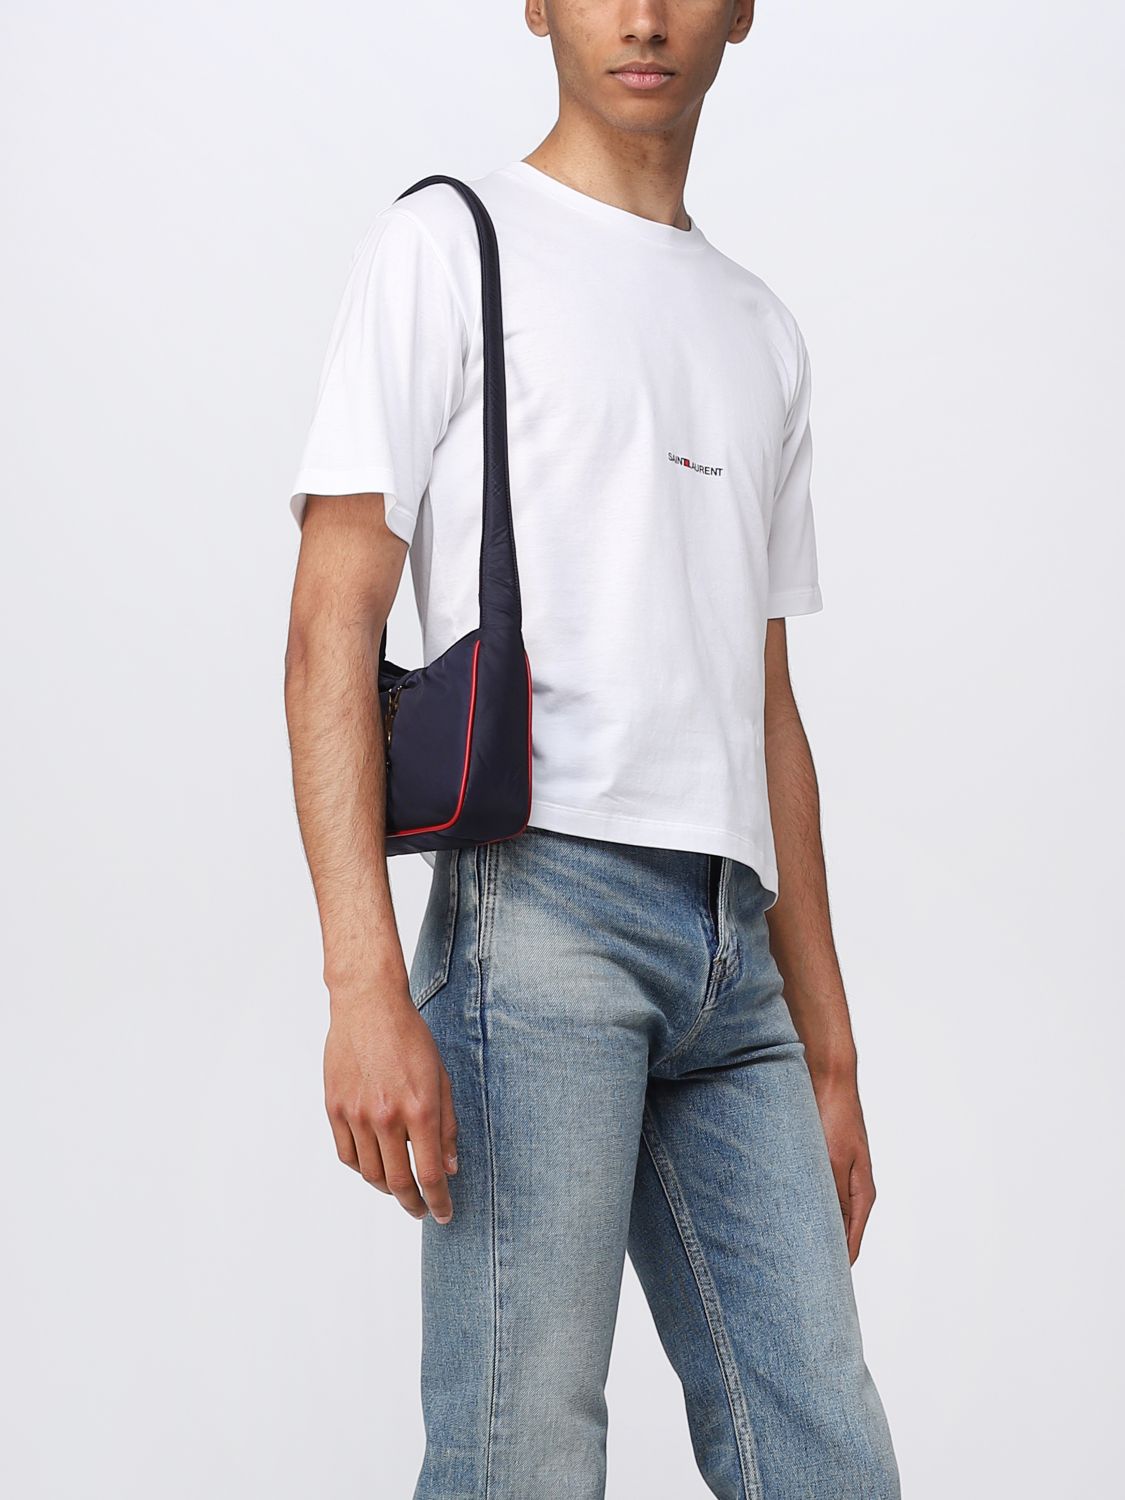 Saint Laurent 5 A 7 Ysl Nylon Shoulder Bag